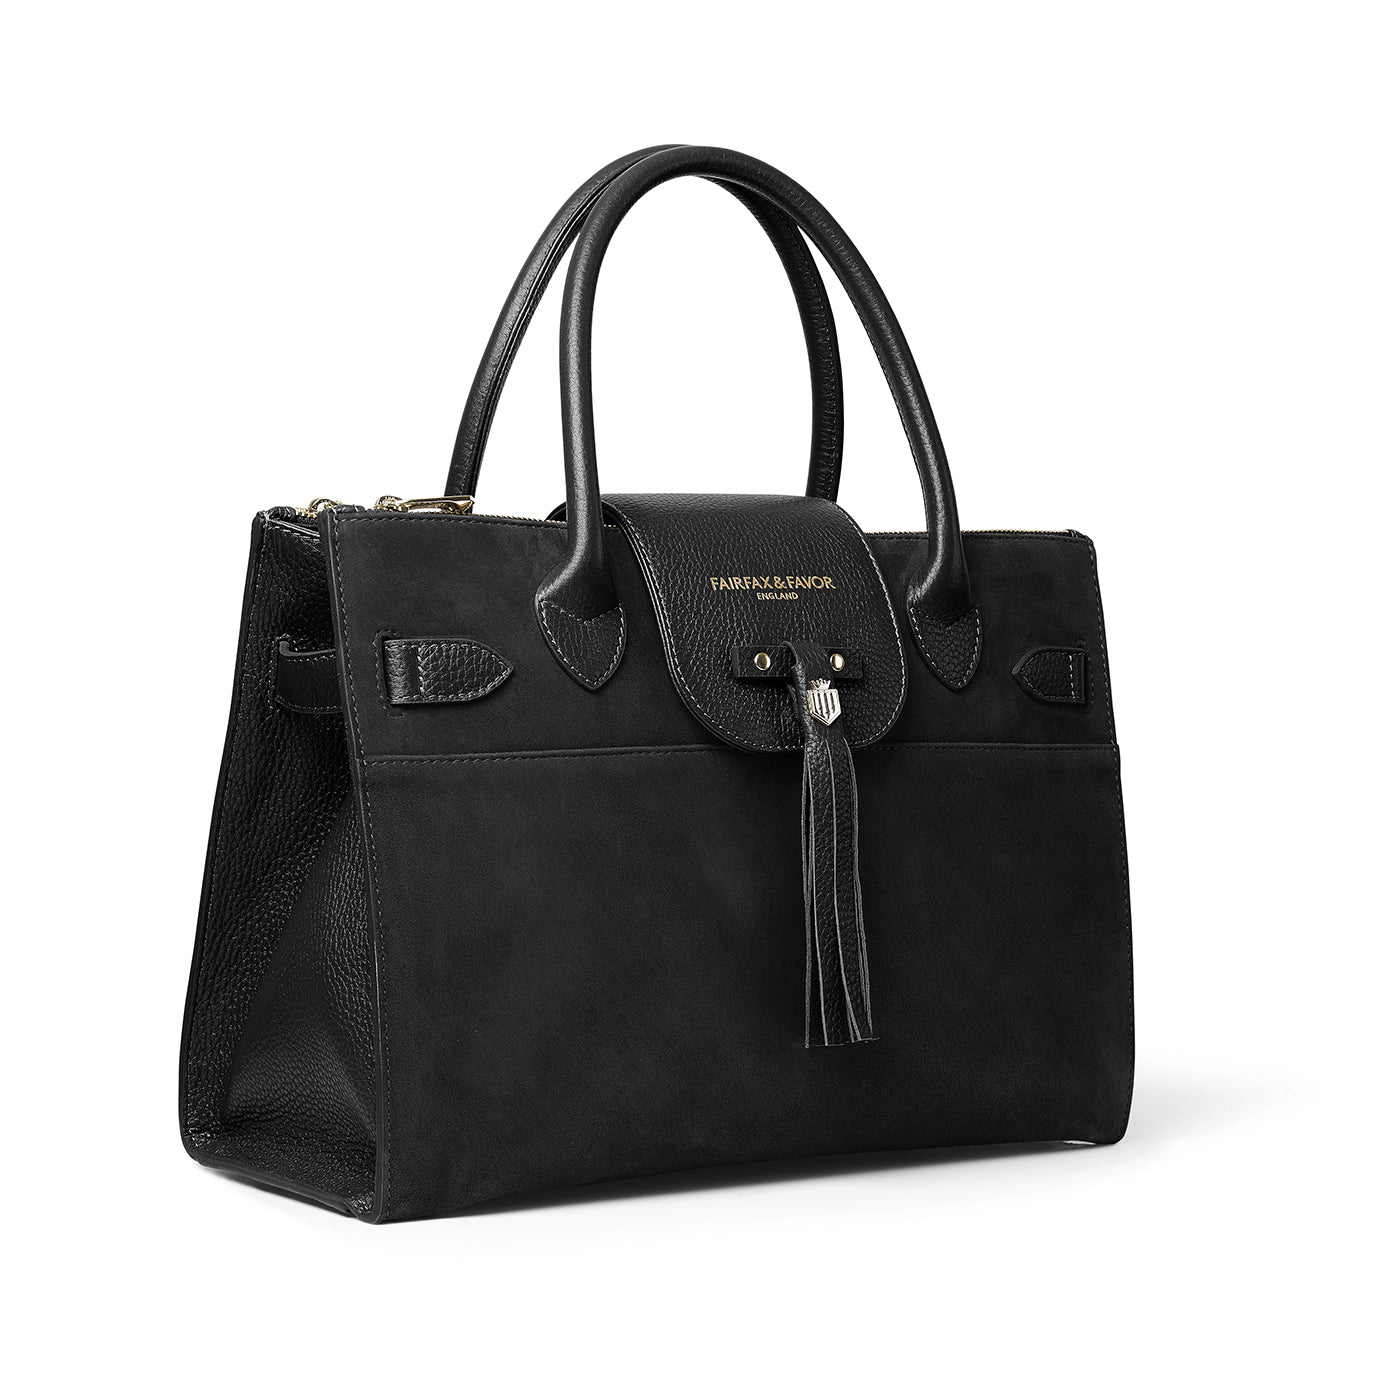 Fairfax & Favor Ladies Windsor Work Bag